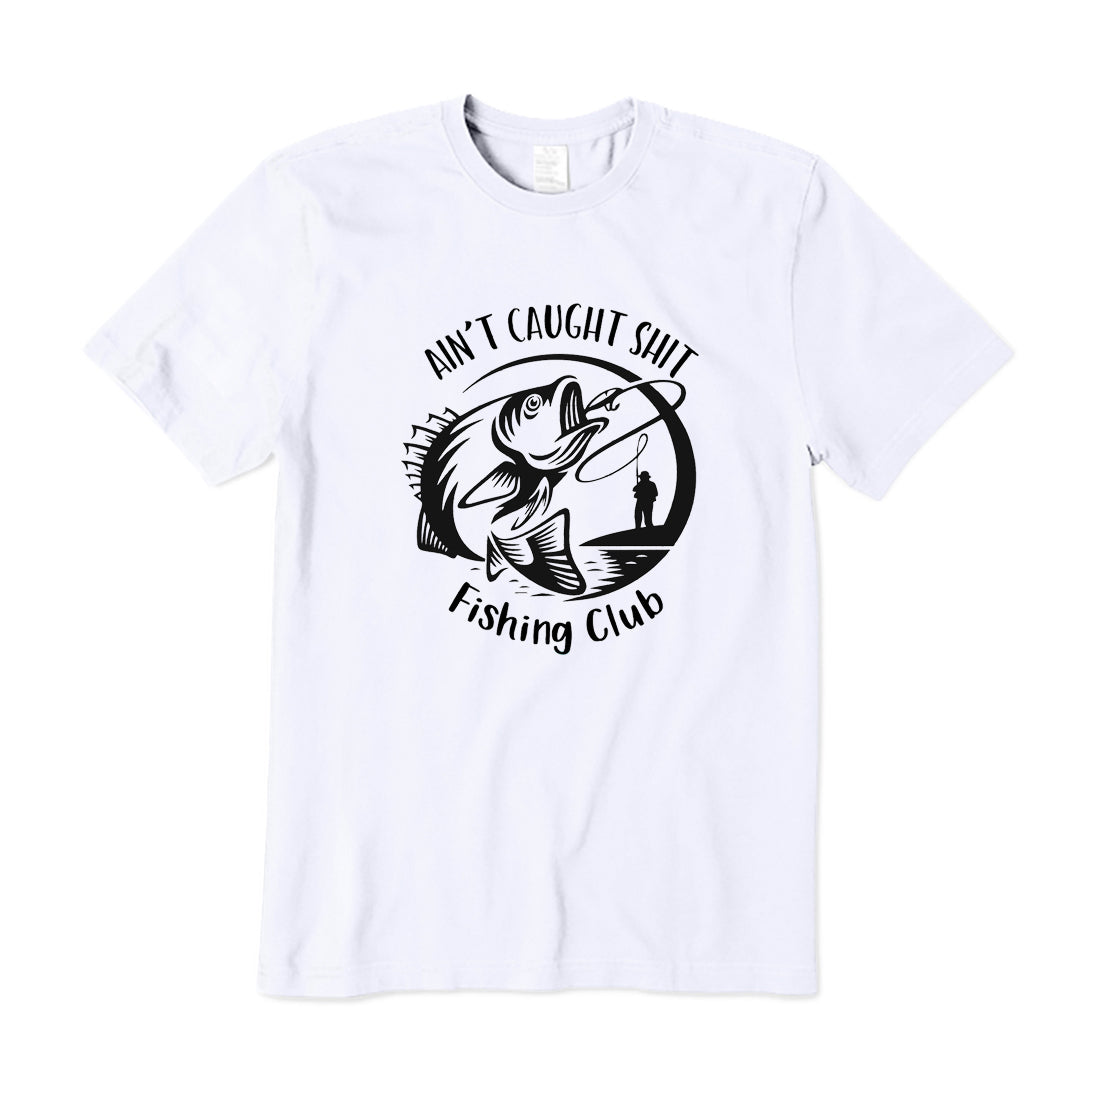 Ain't Caught Fishing Club T-Shirt